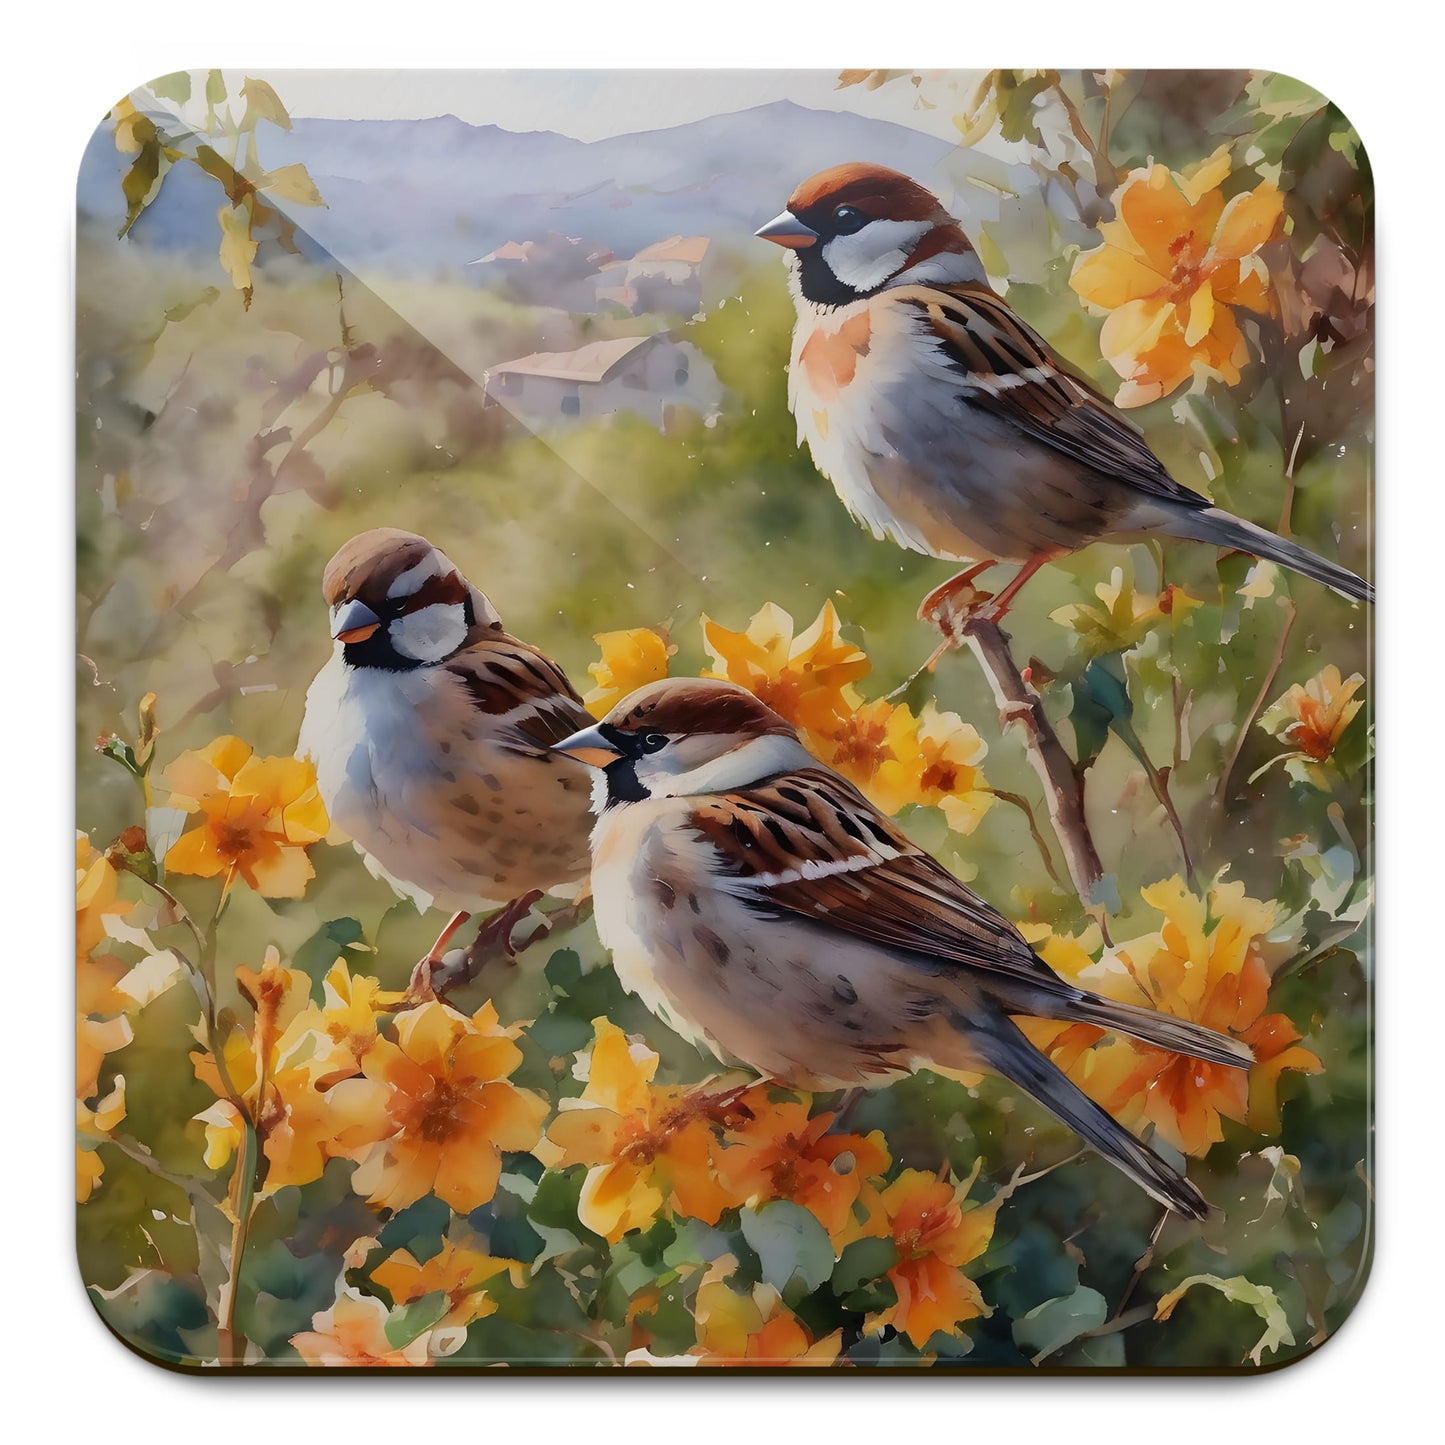 Watercolour British Bird Art 4 x Coaster Set 4 x Sparrows Coaster